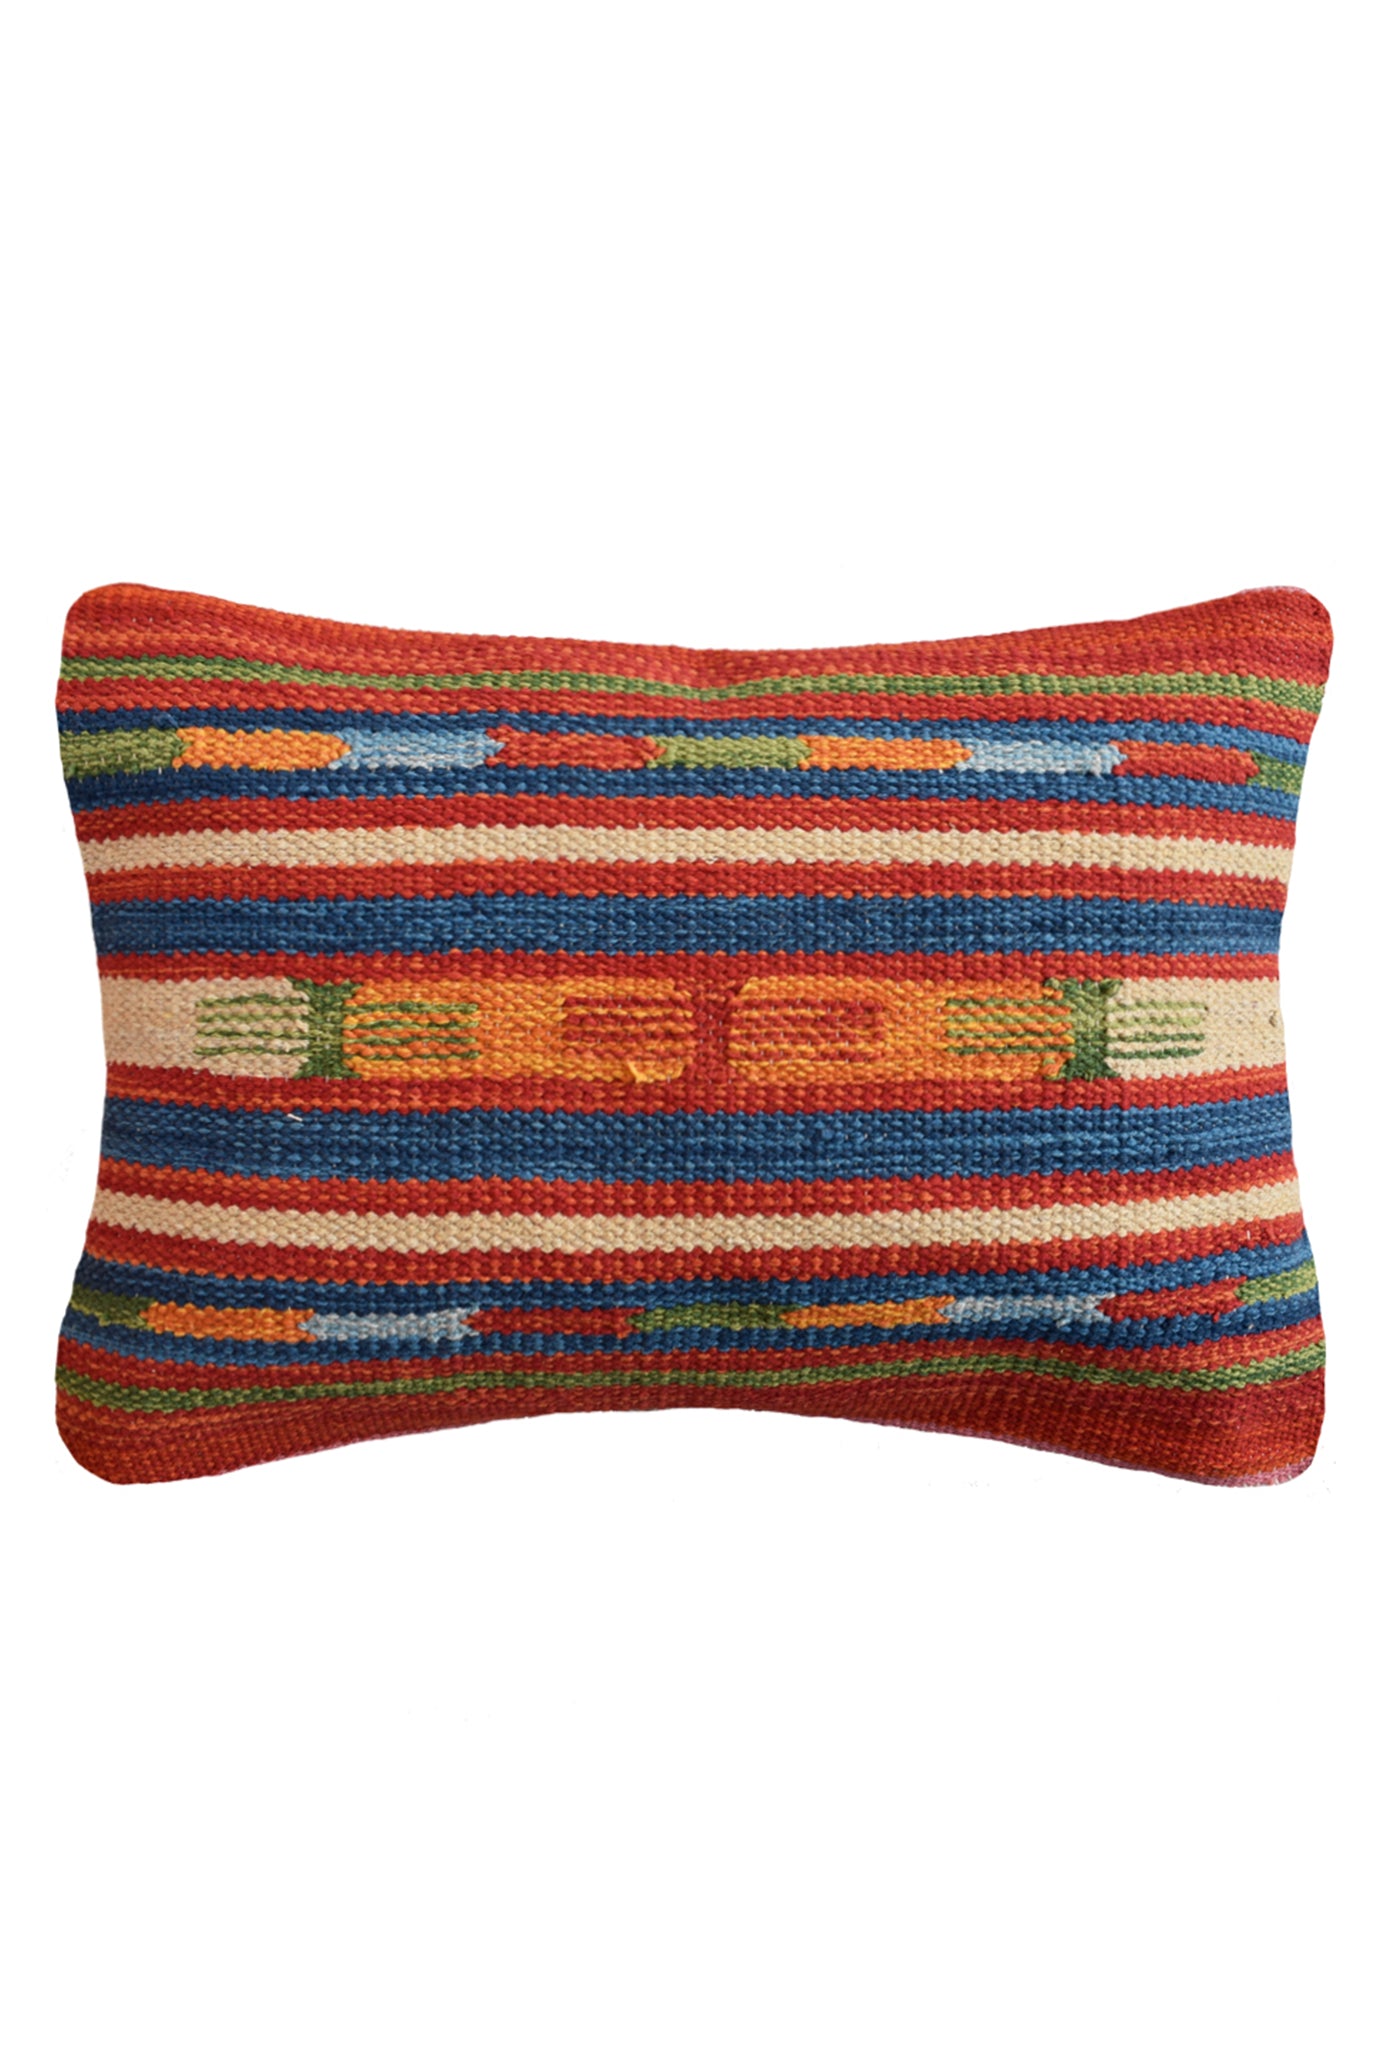 kilim-jodi-cushion cover-handcrafted-vibrant-home decor-home linen